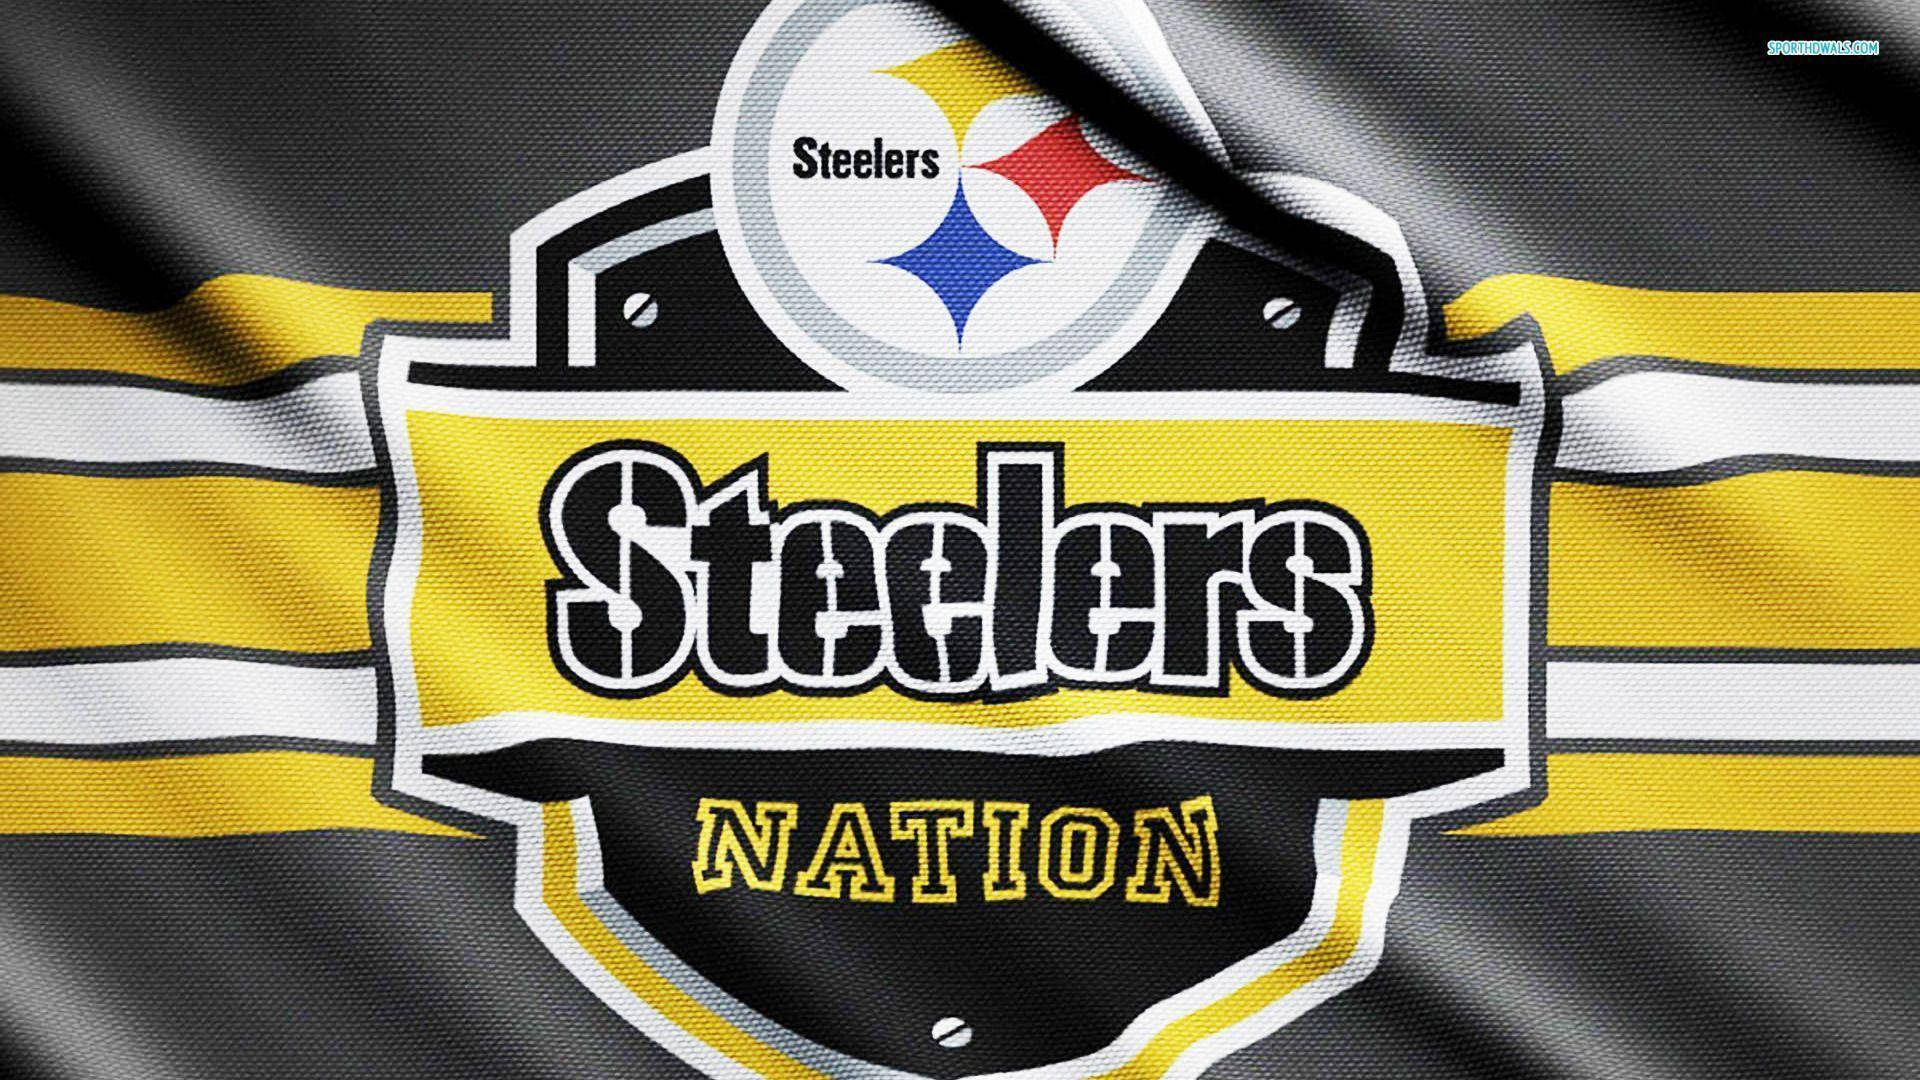 Steelers Nation Flag Banner Background